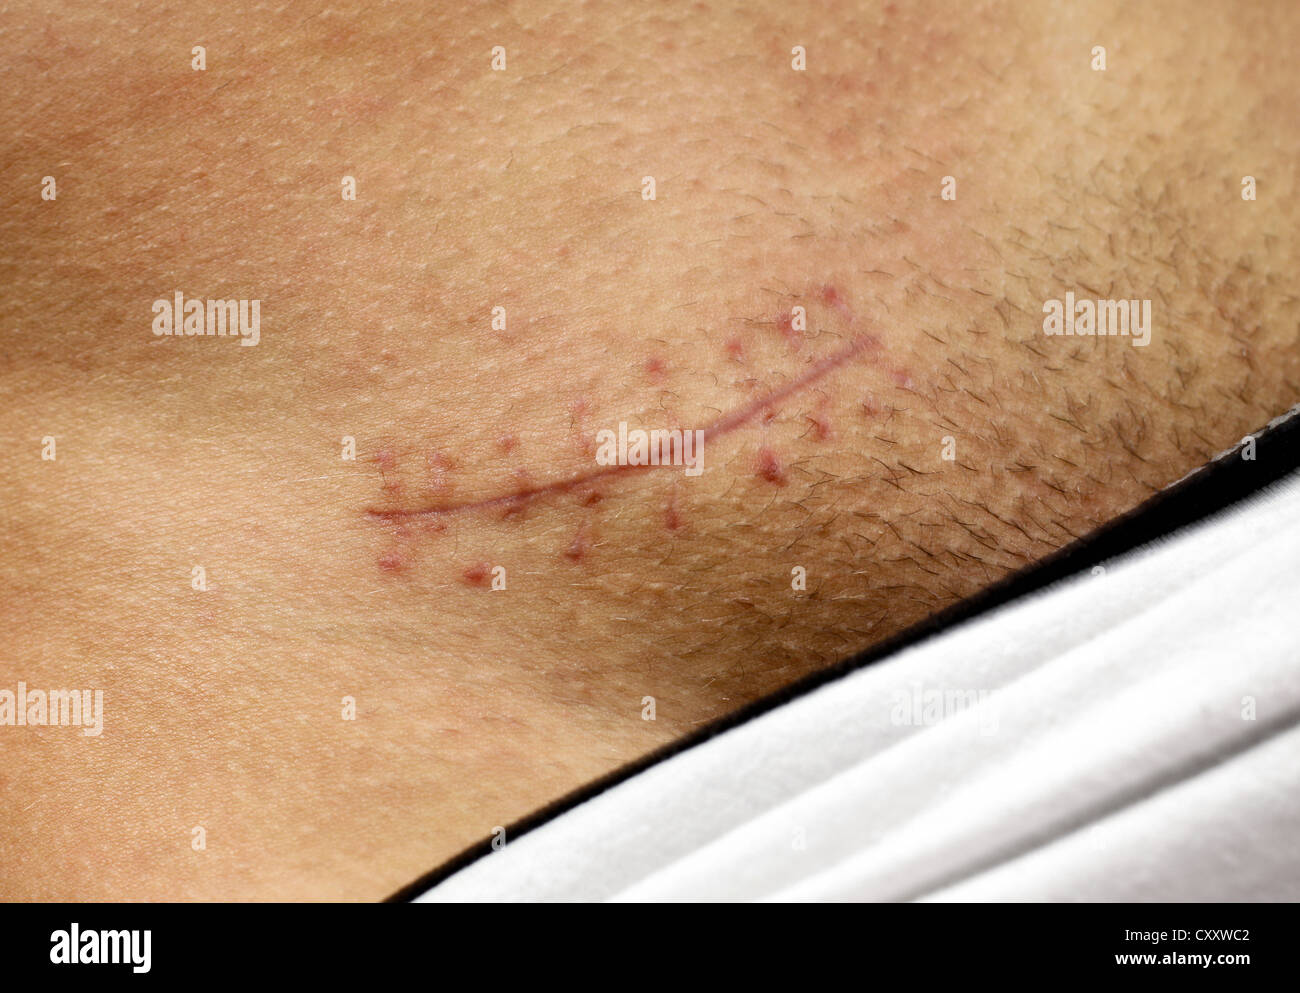 A man's scar after surgery, hernia inguinalis Stock Photo